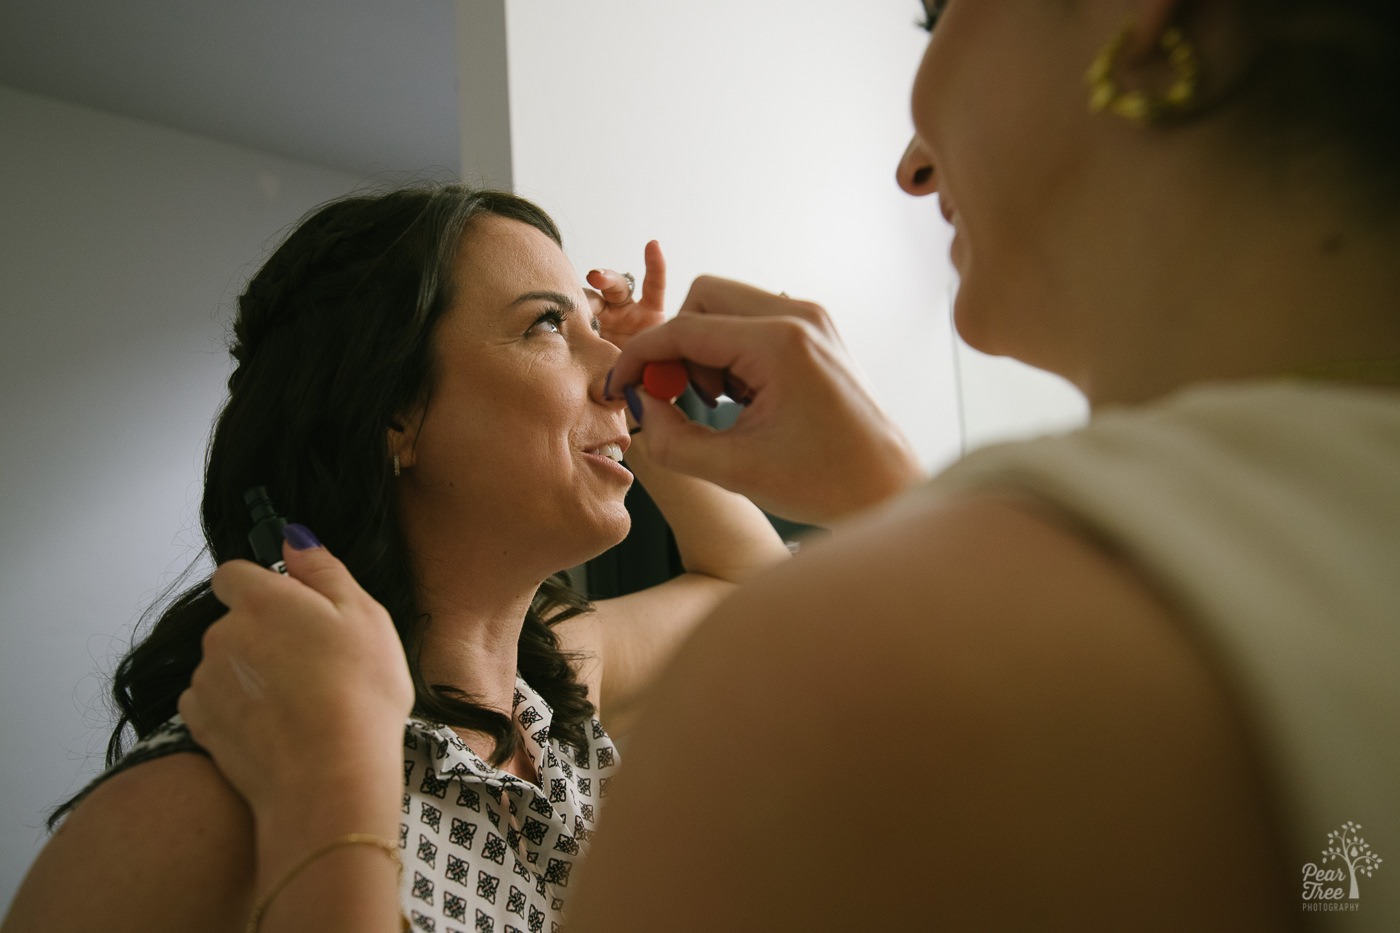 College daughter doing her mom's wedding makeup.